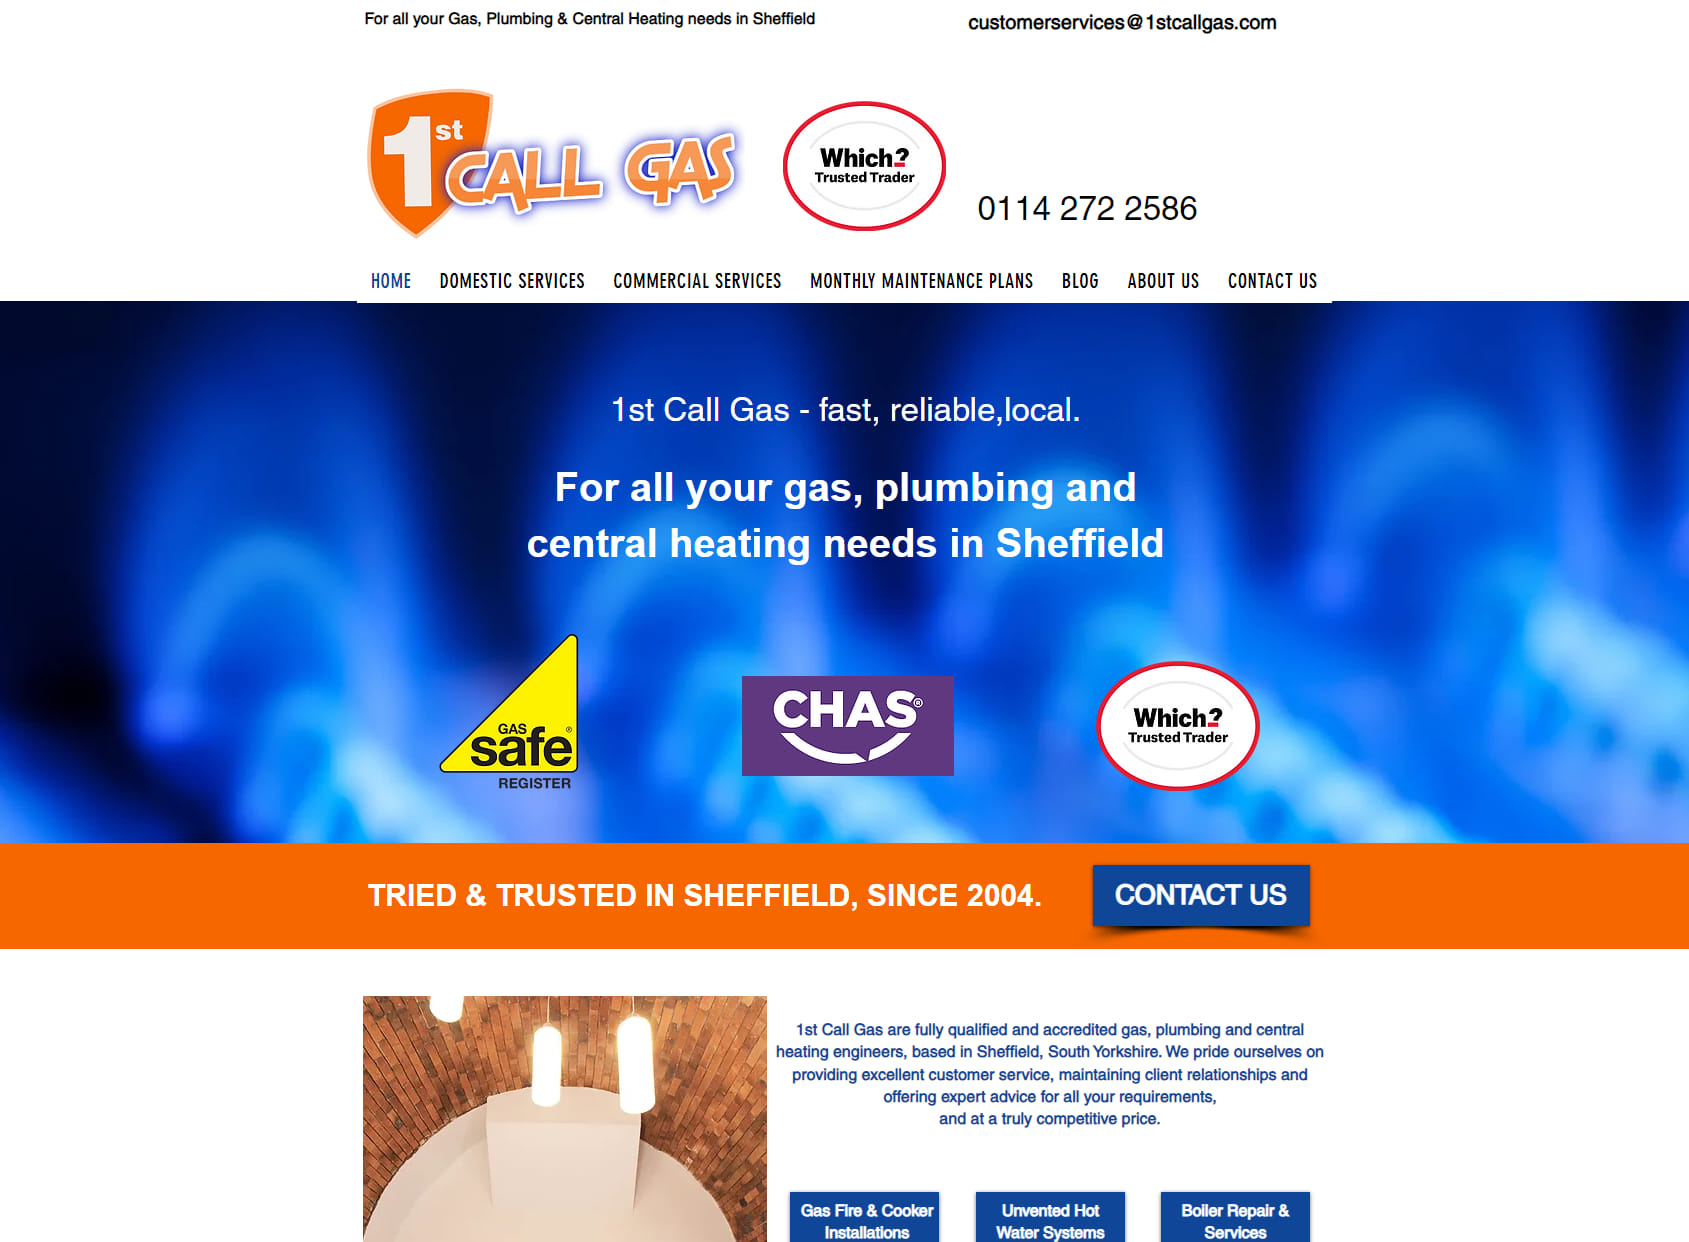 1st Call Gas Services Ltd